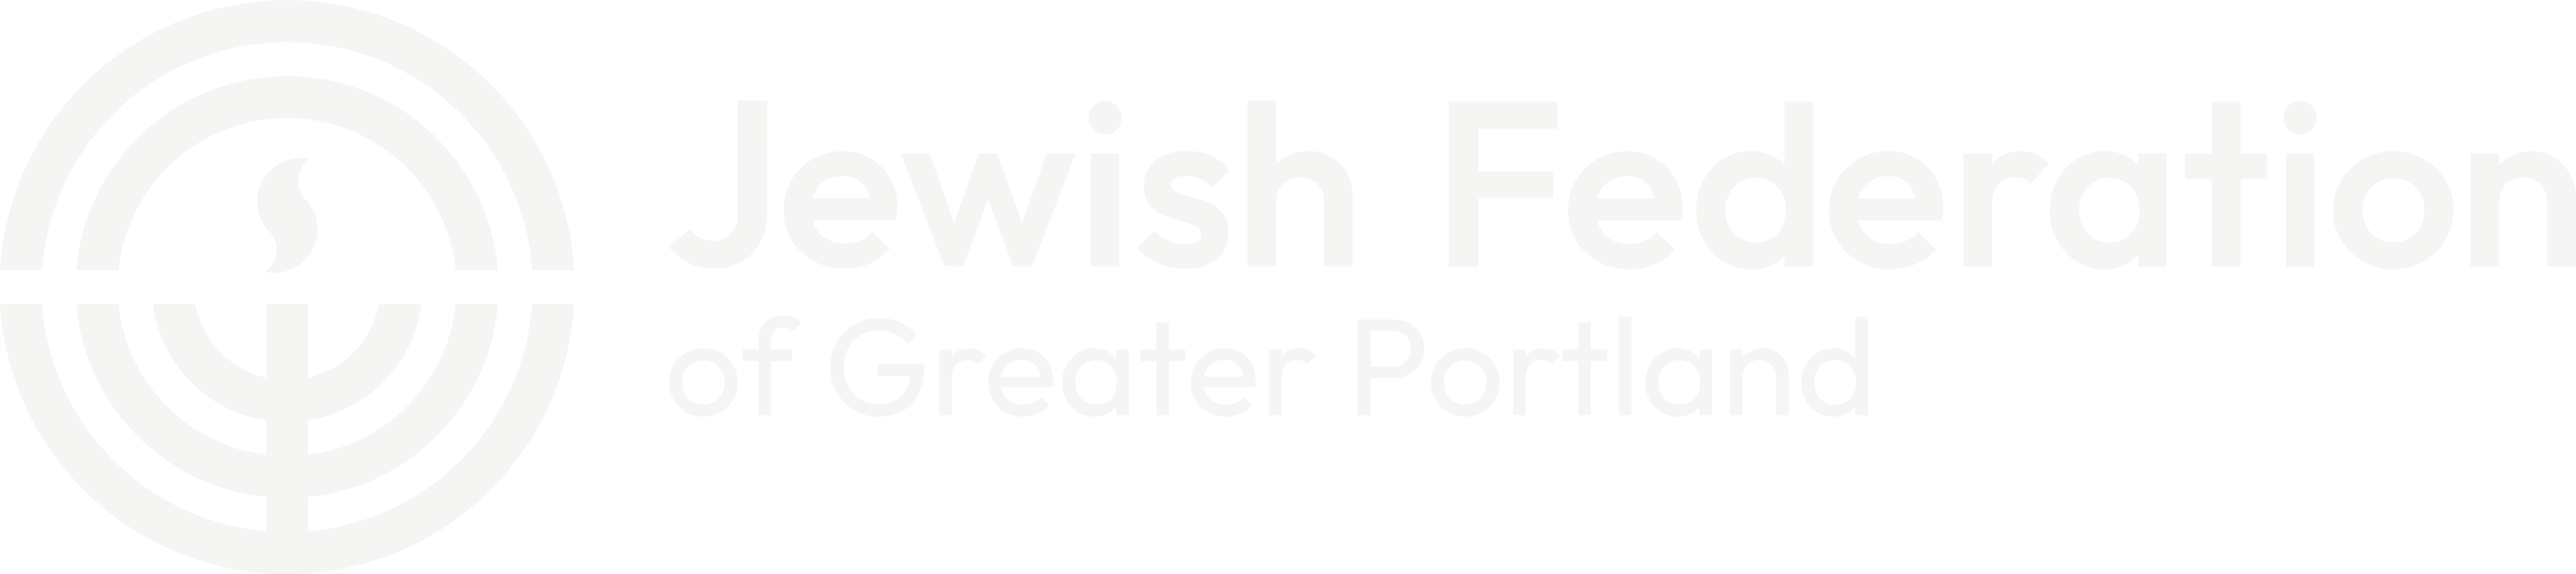 Jewish Federation Of Greater Portland logo